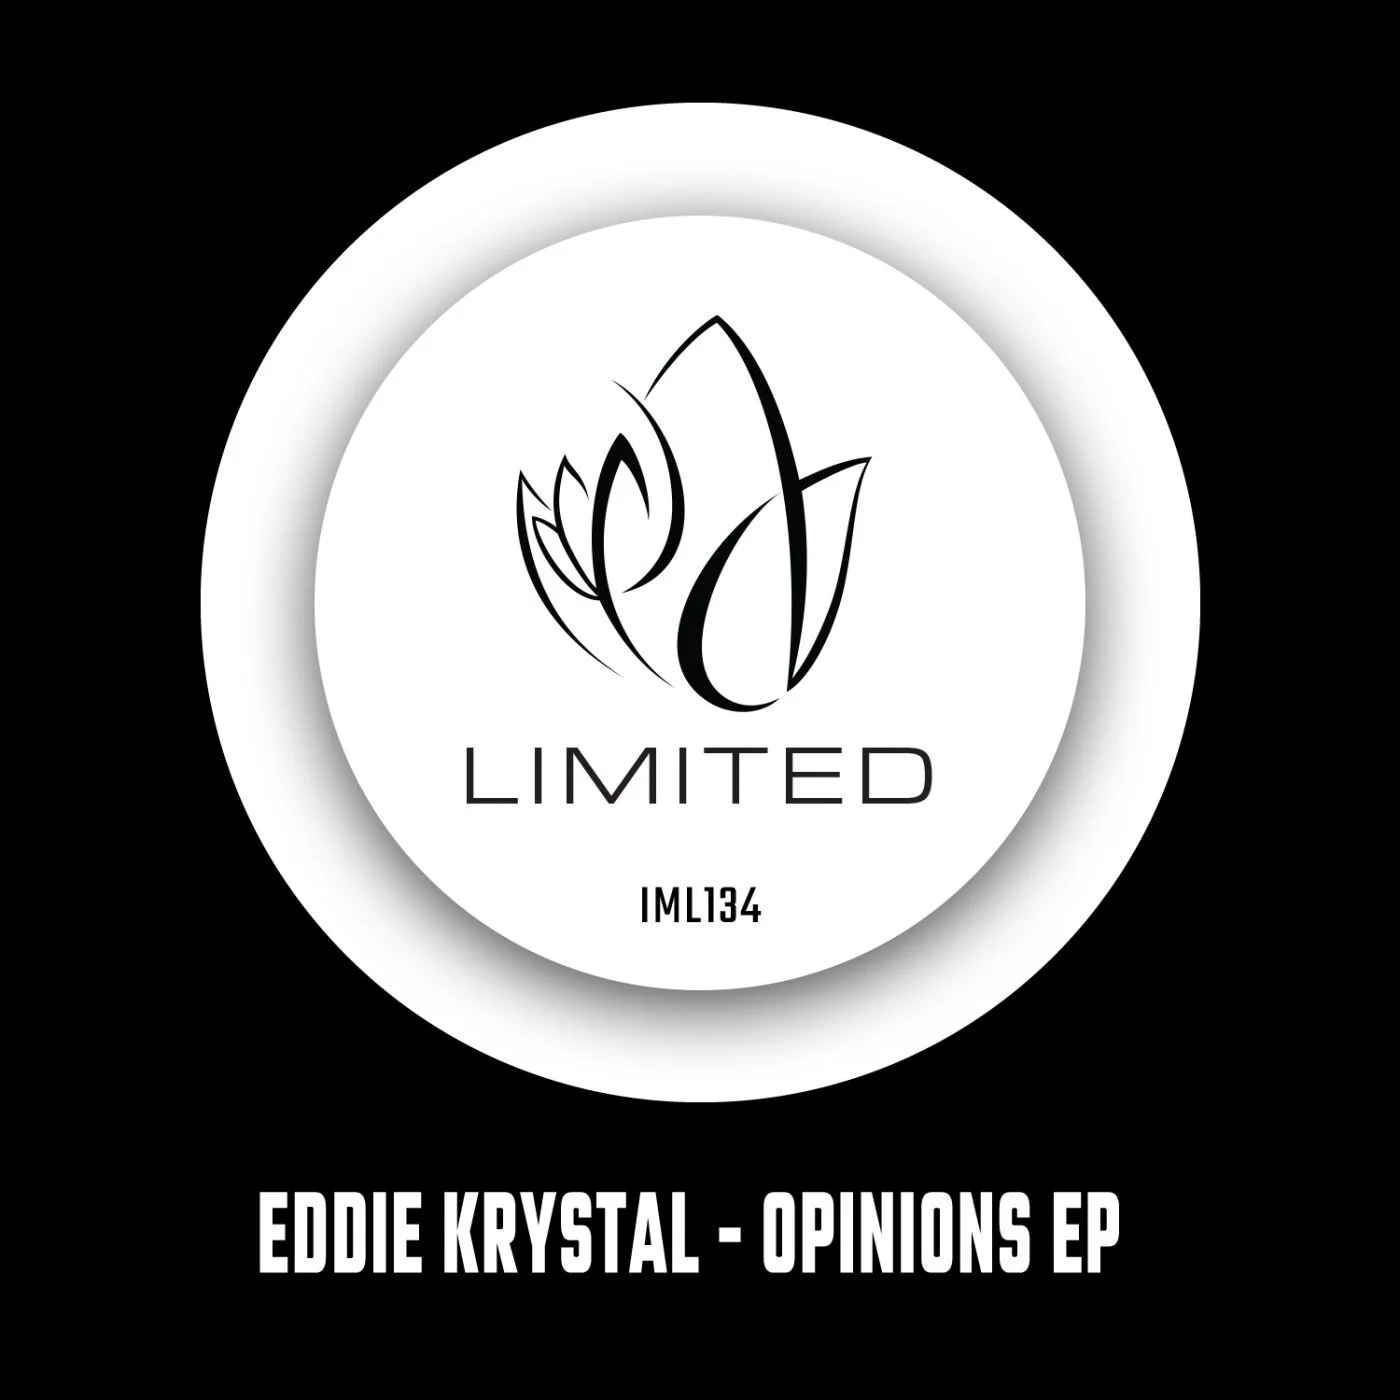 Eddie Krystal - Opinions (Extended Mix)